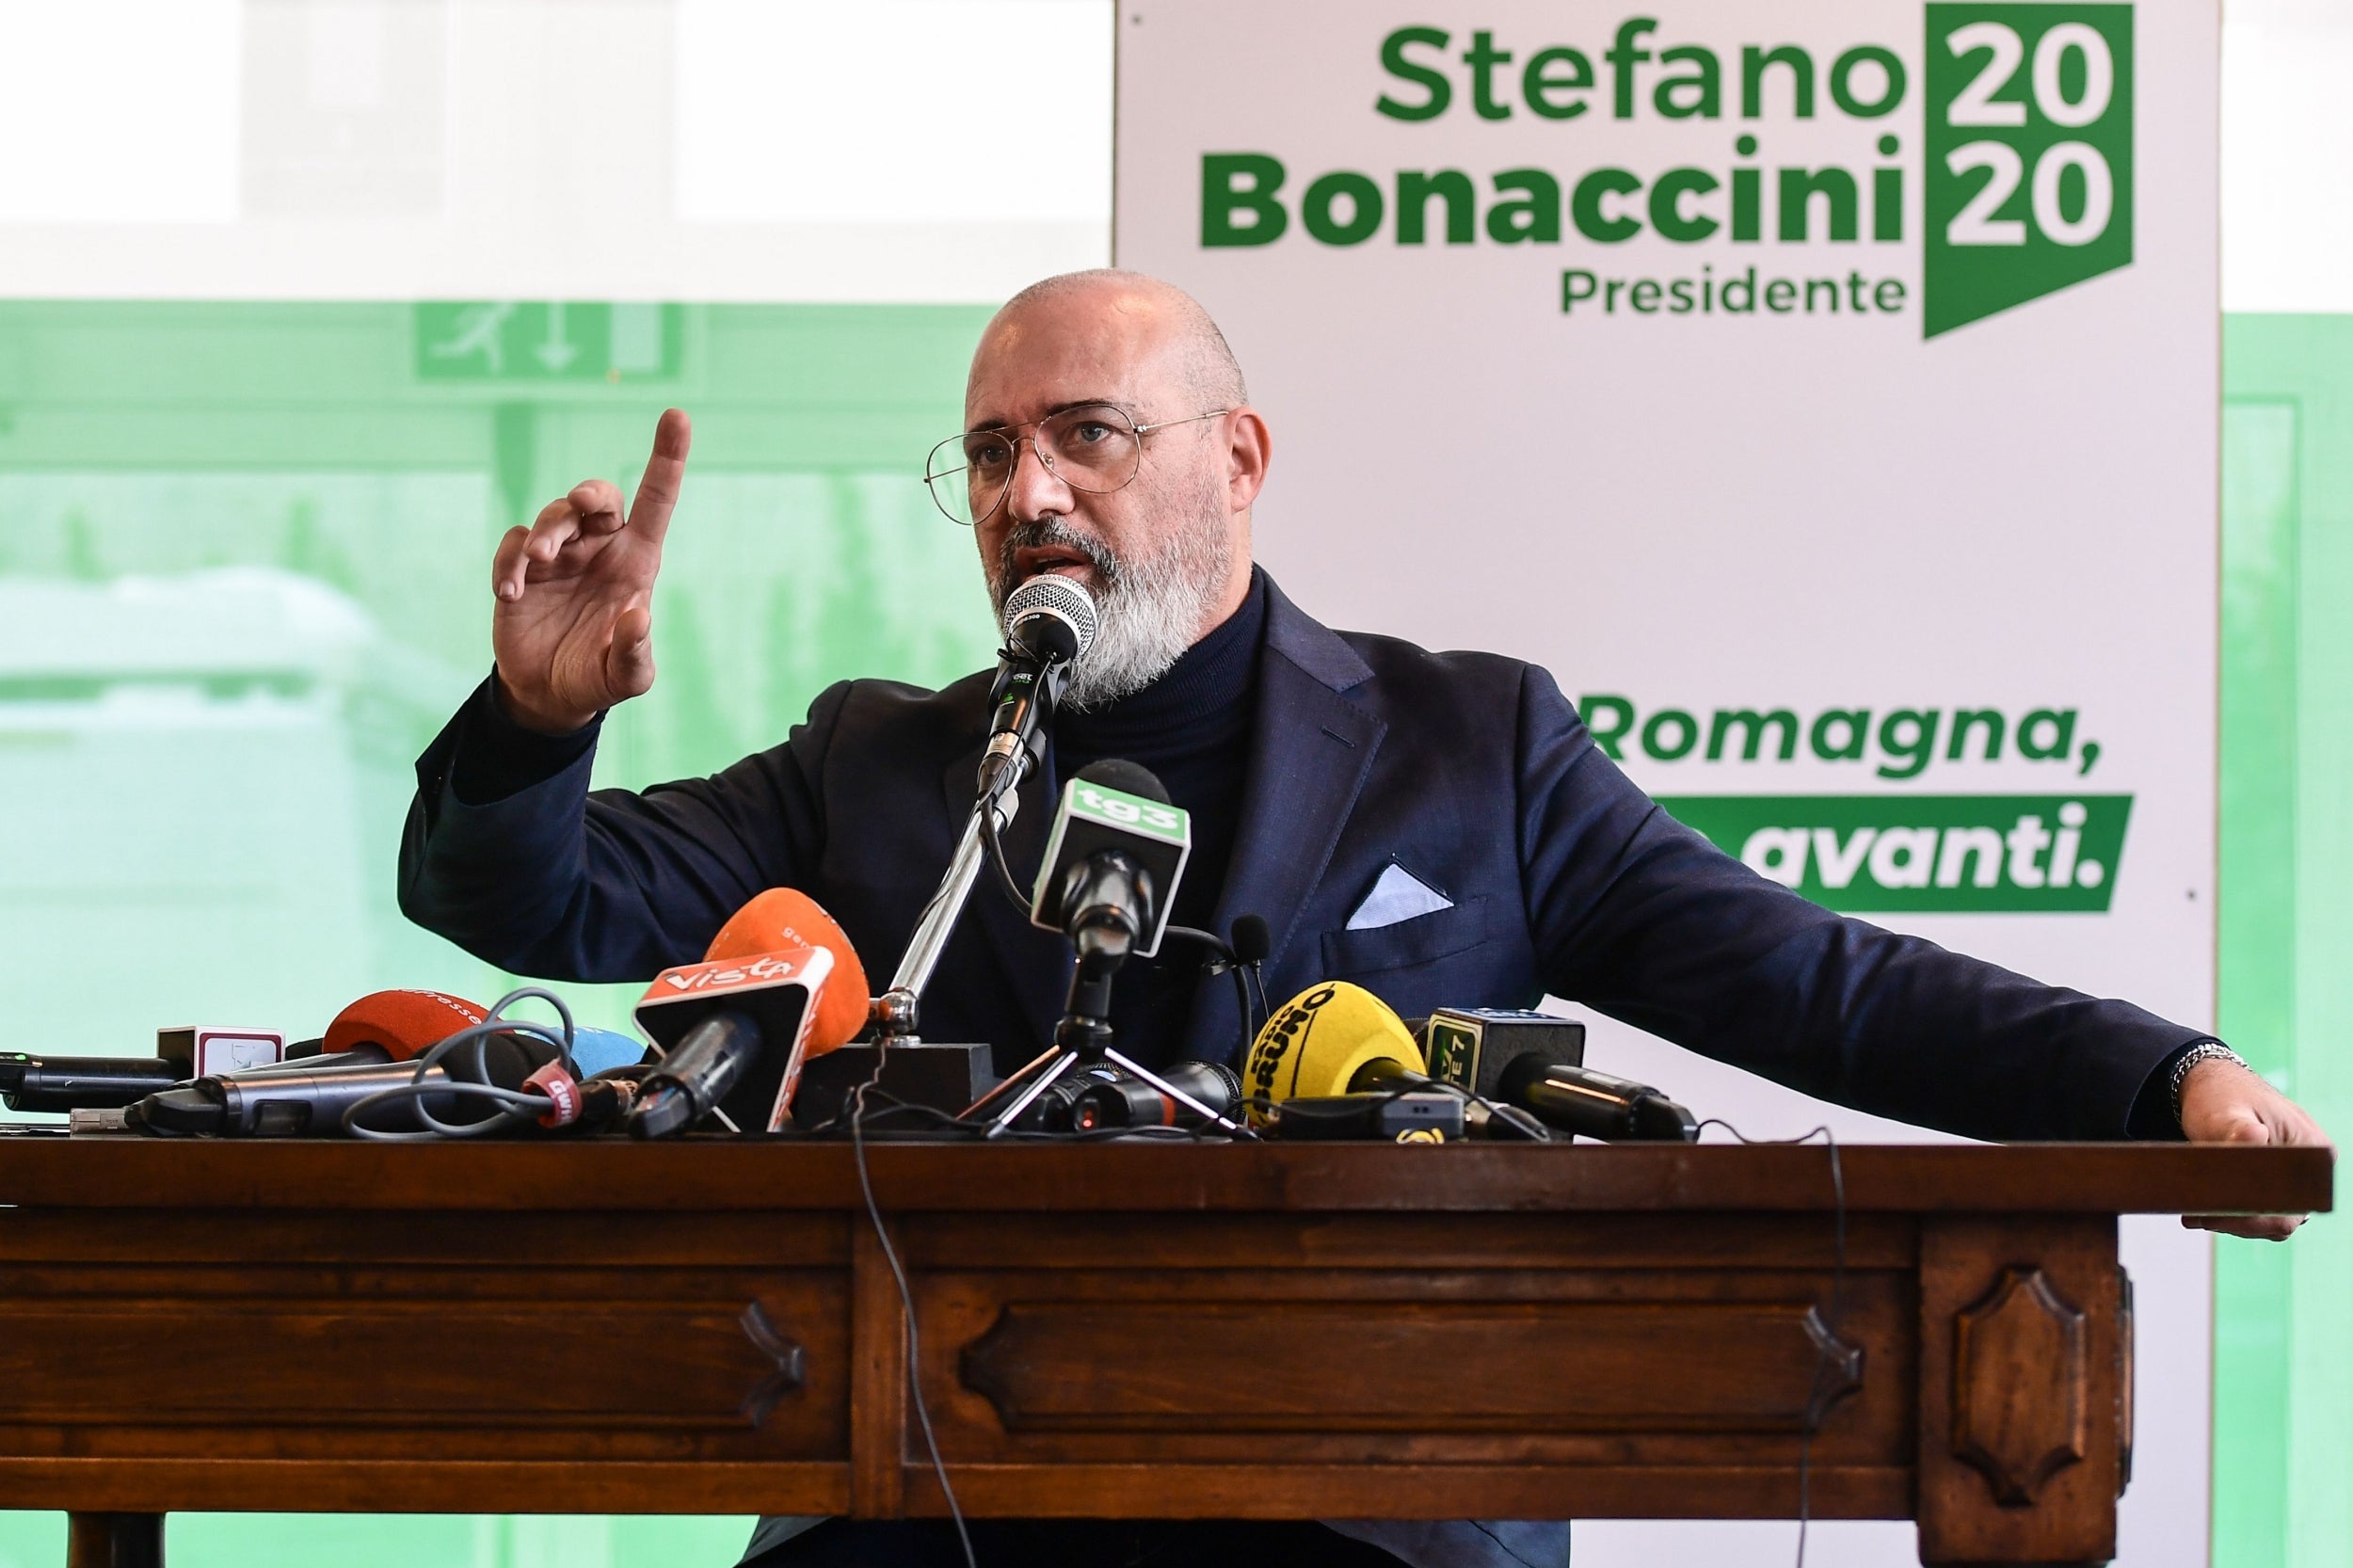 PD candidate Stefano Bonaccini